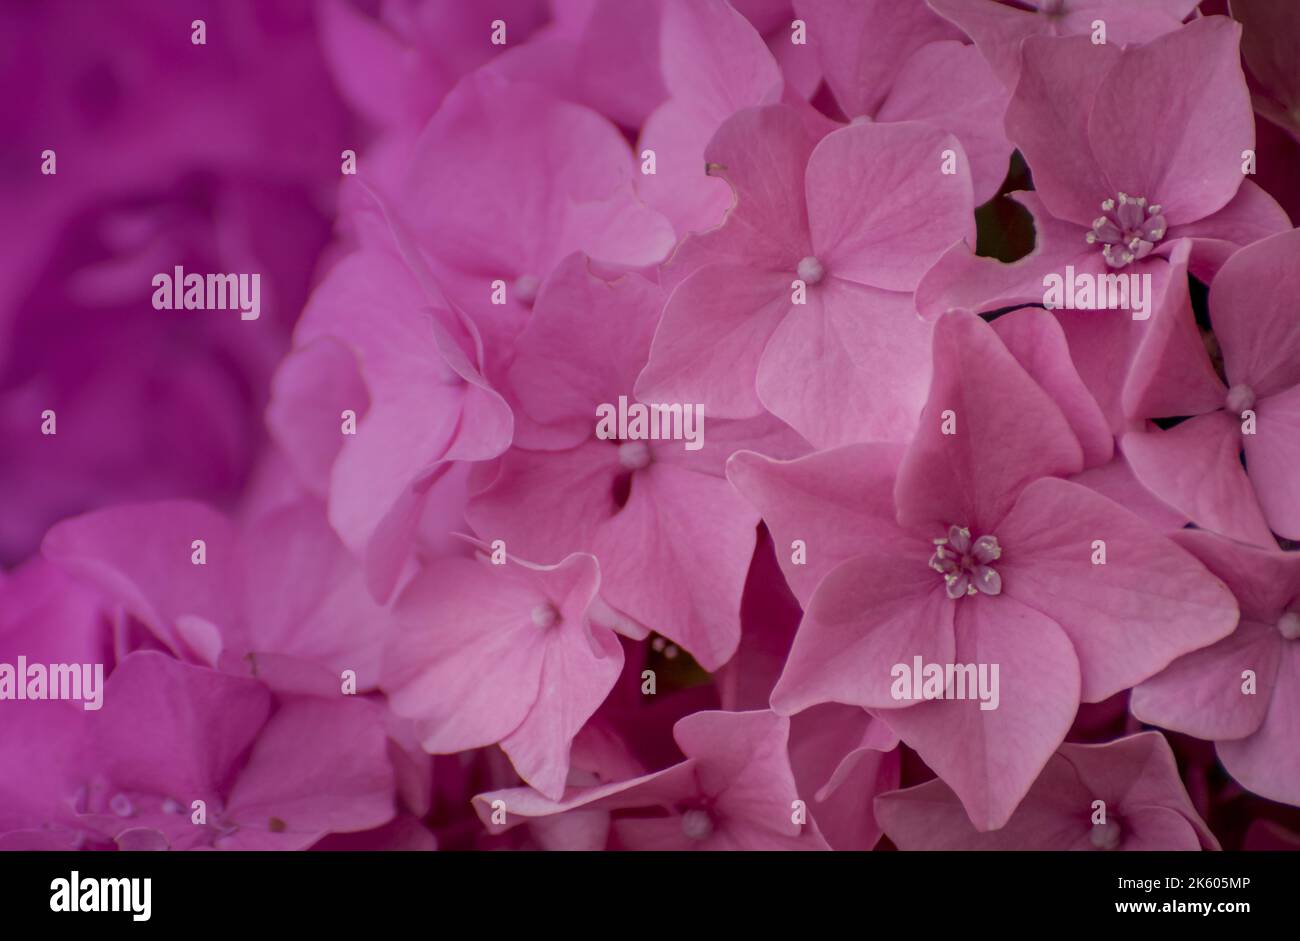 Closeup of red poinsettias (Euphorbia pulcherrima) flower background Stock Photo